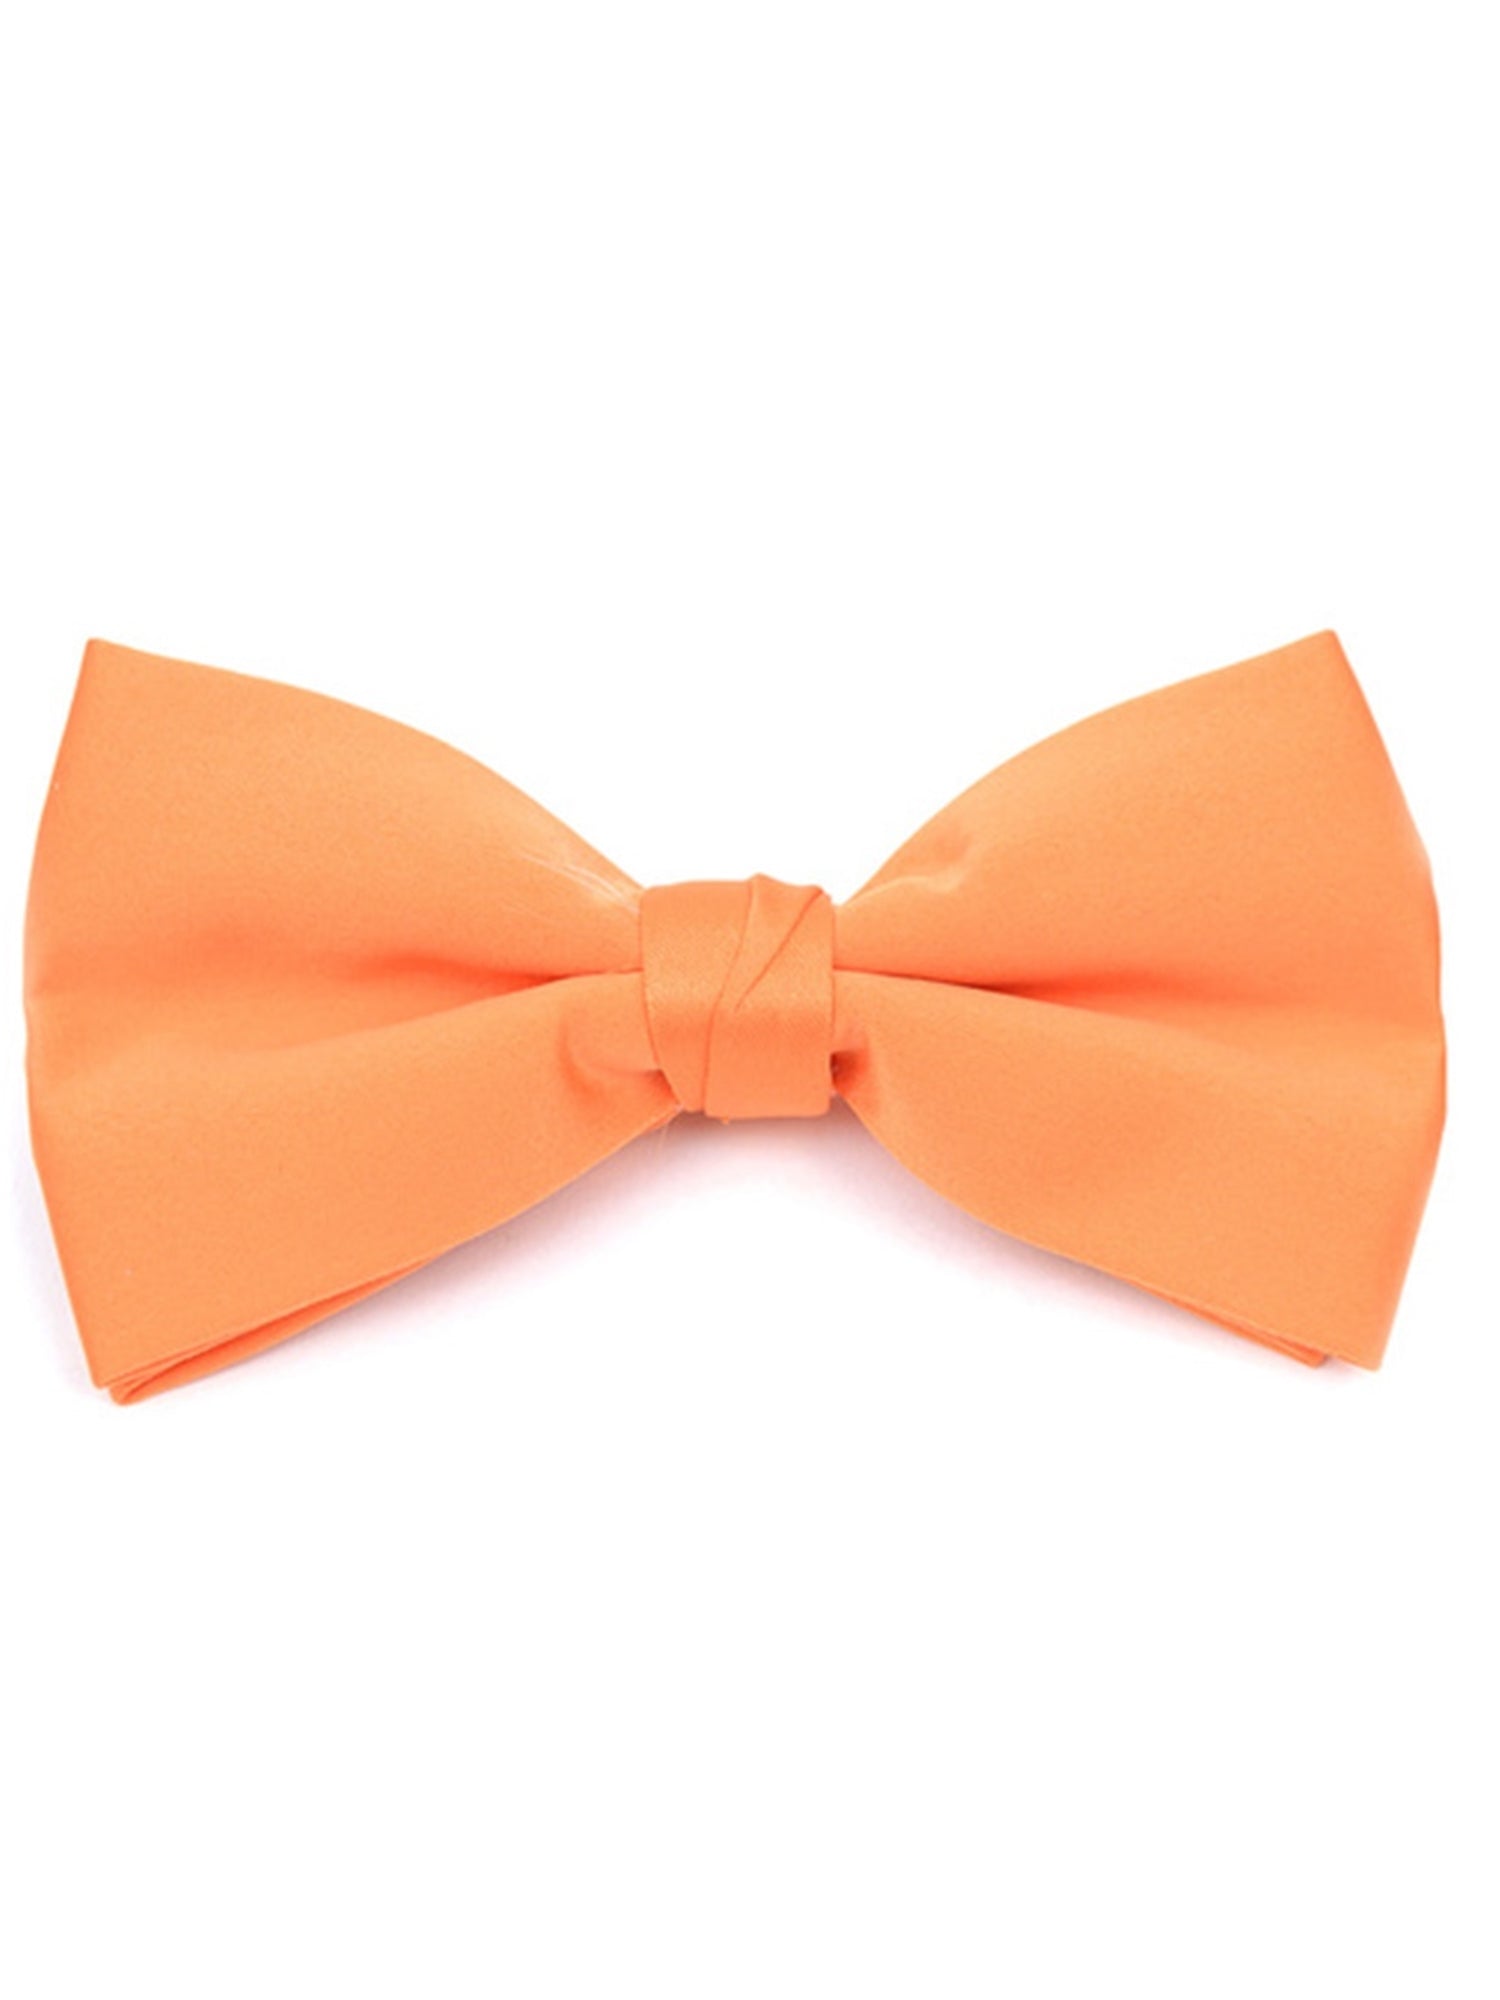 Men's Pre-tied Adjustable Length Bow Tie - Formal Tuxedo Solid Color Men's Solid Color Bow Tie TheDapperTie Orange One Size 